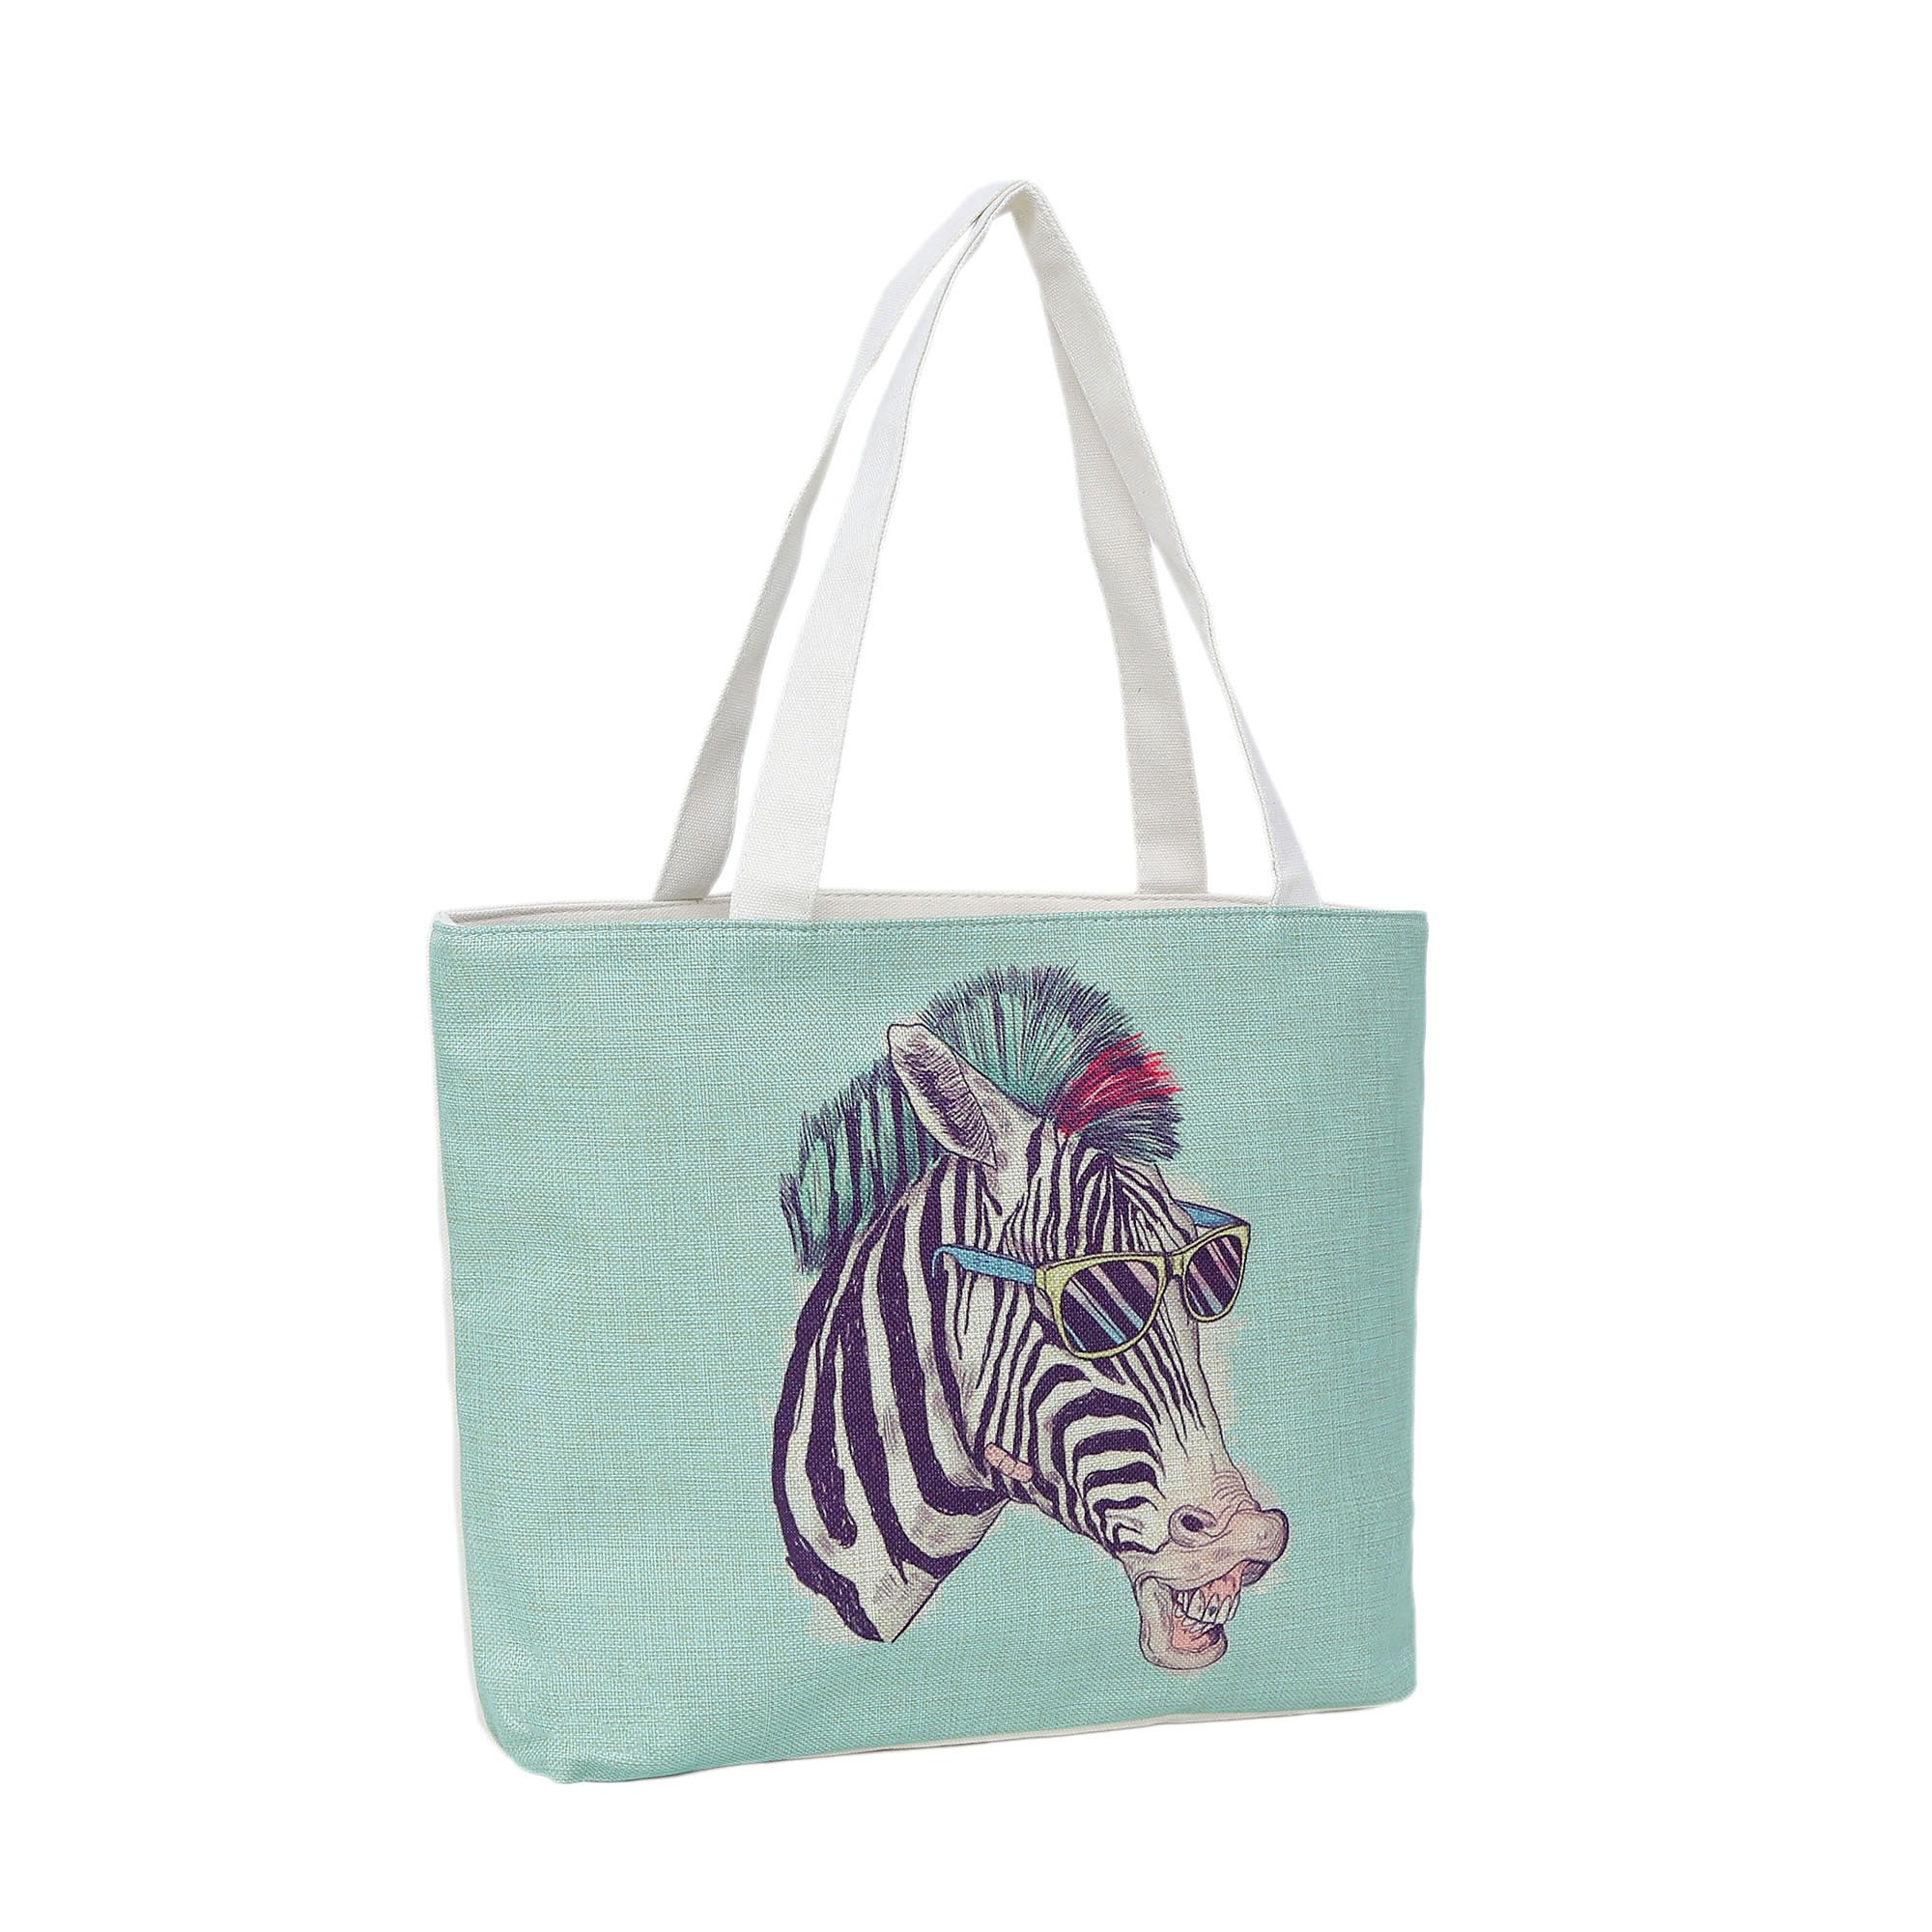 DonDon Strandtasche 46 x 32 x 10 cm Motiv Funky Zebra mintfarben-Jute Shopper Schultertasche Vintage Stil